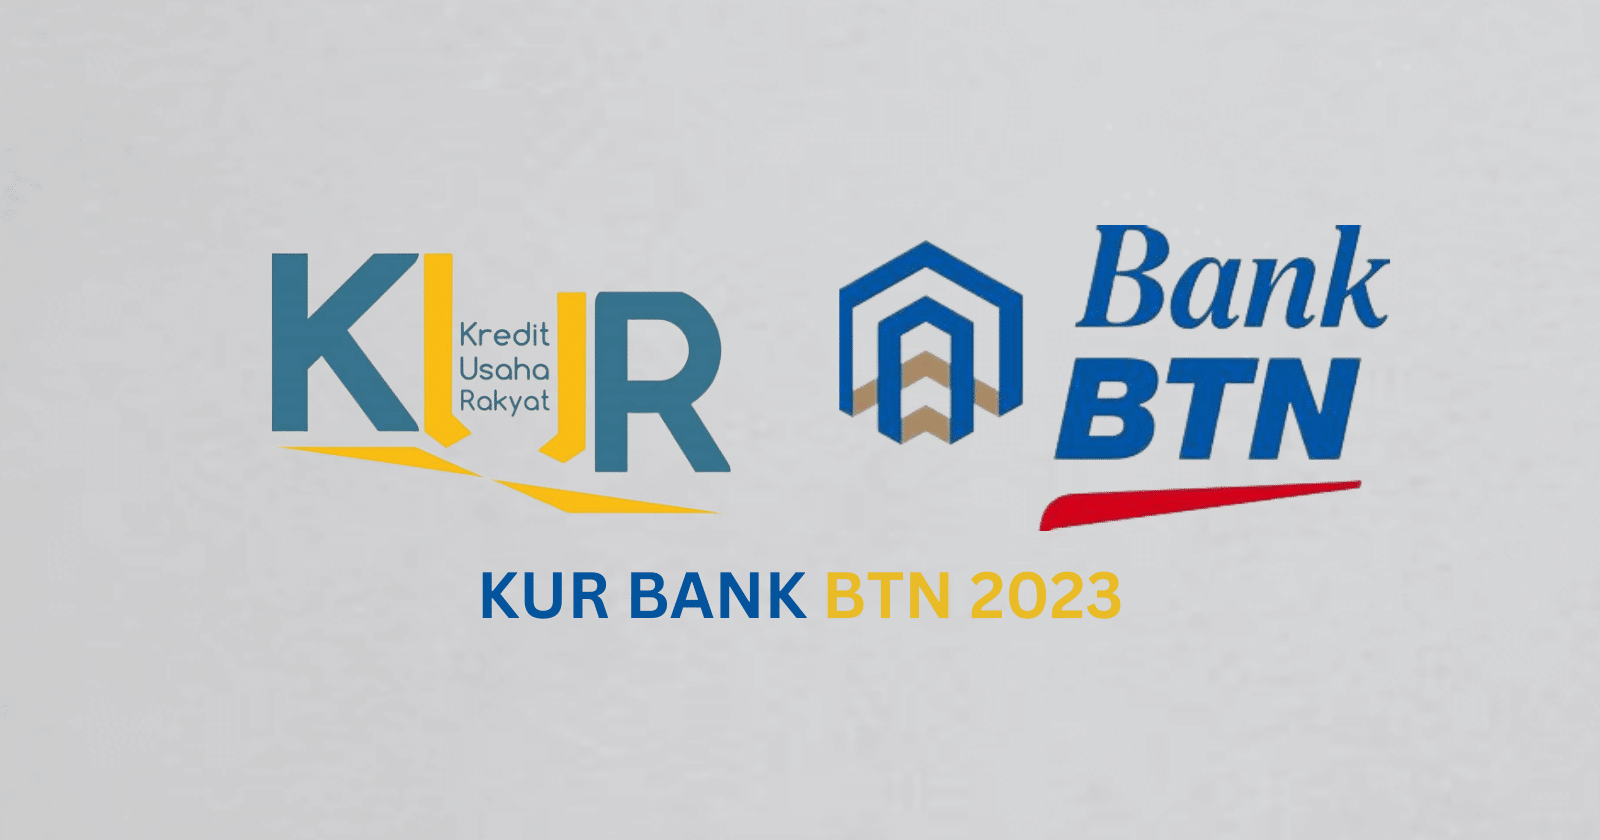 KUR BANK BTN 2023